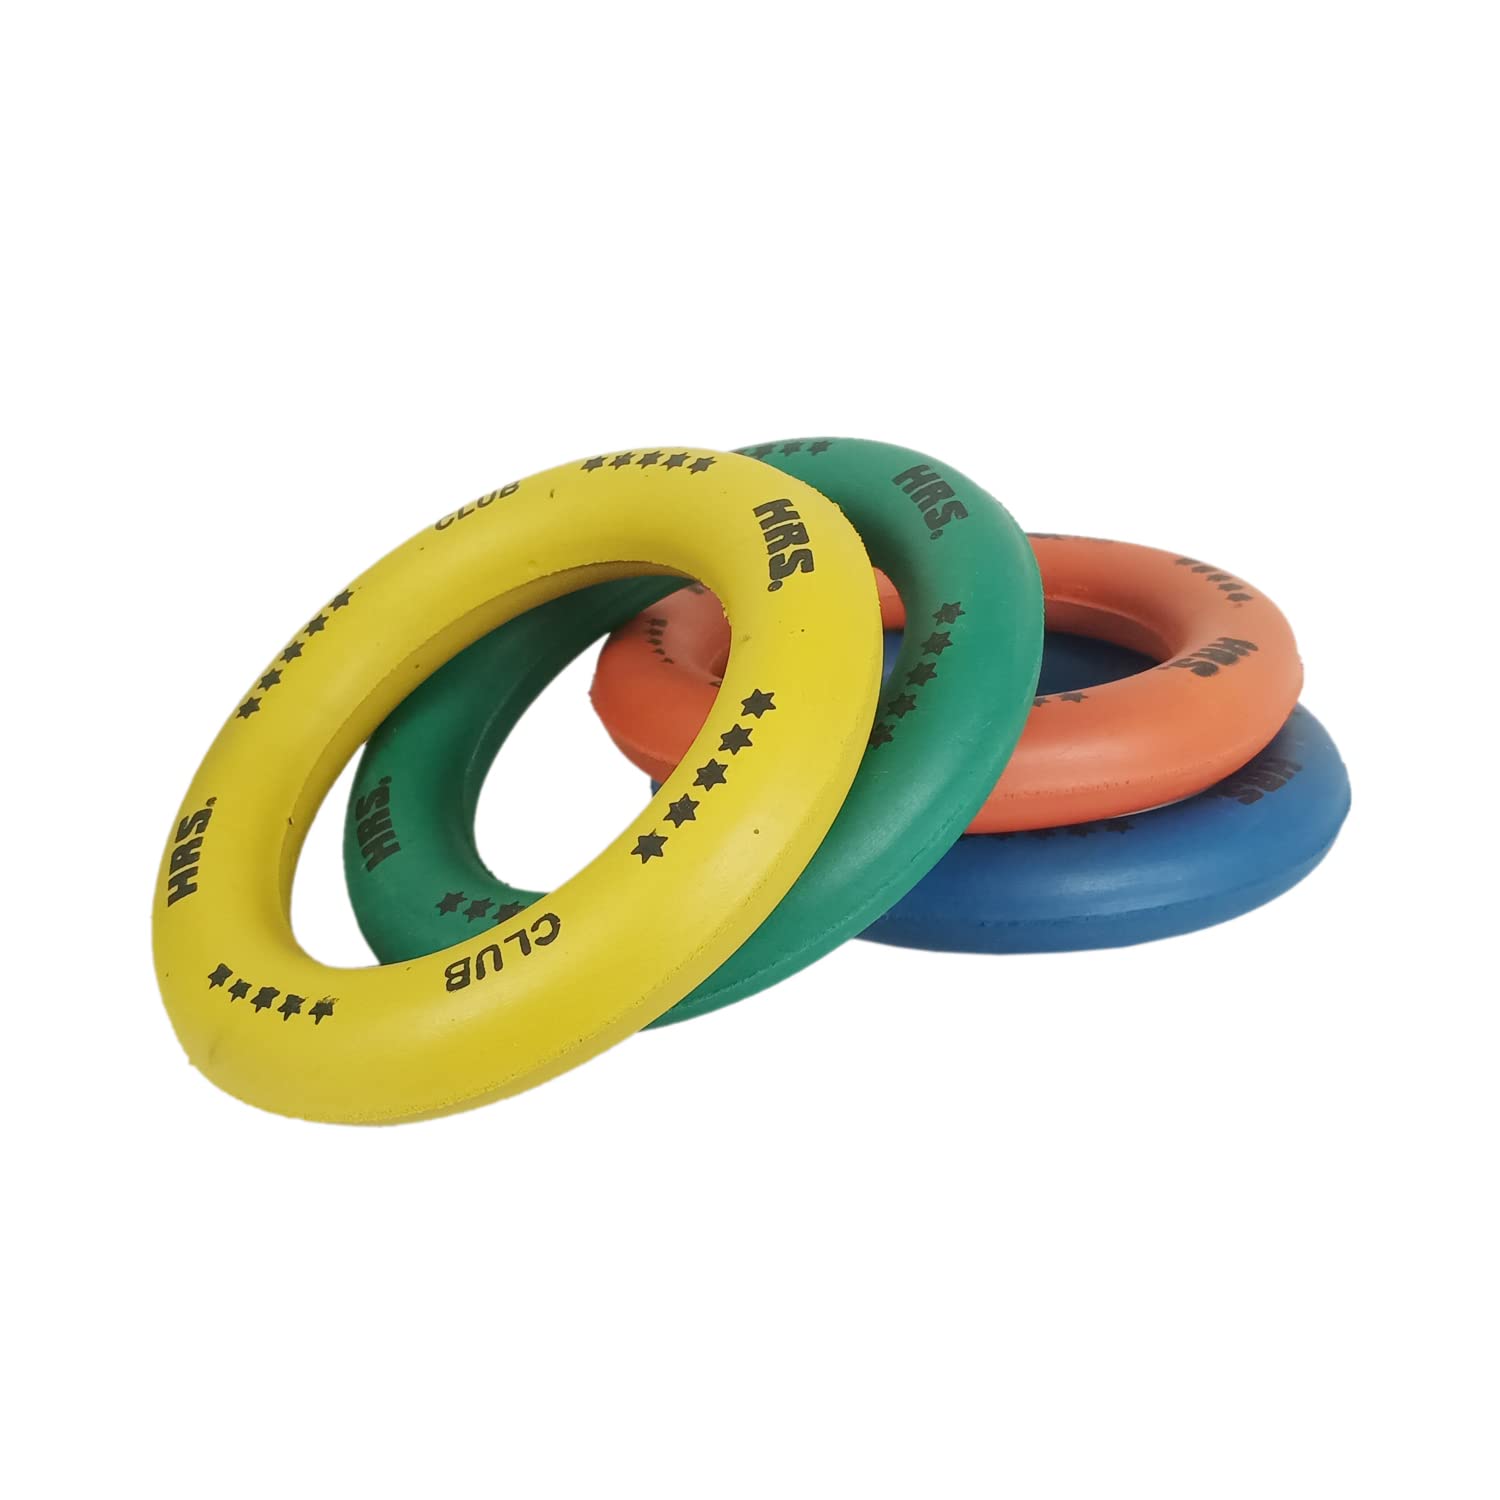 HRS TKR-104 Club Tennikoit Ring, Pack of 12 - Assorted Color - Best Price online Prokicksports.com